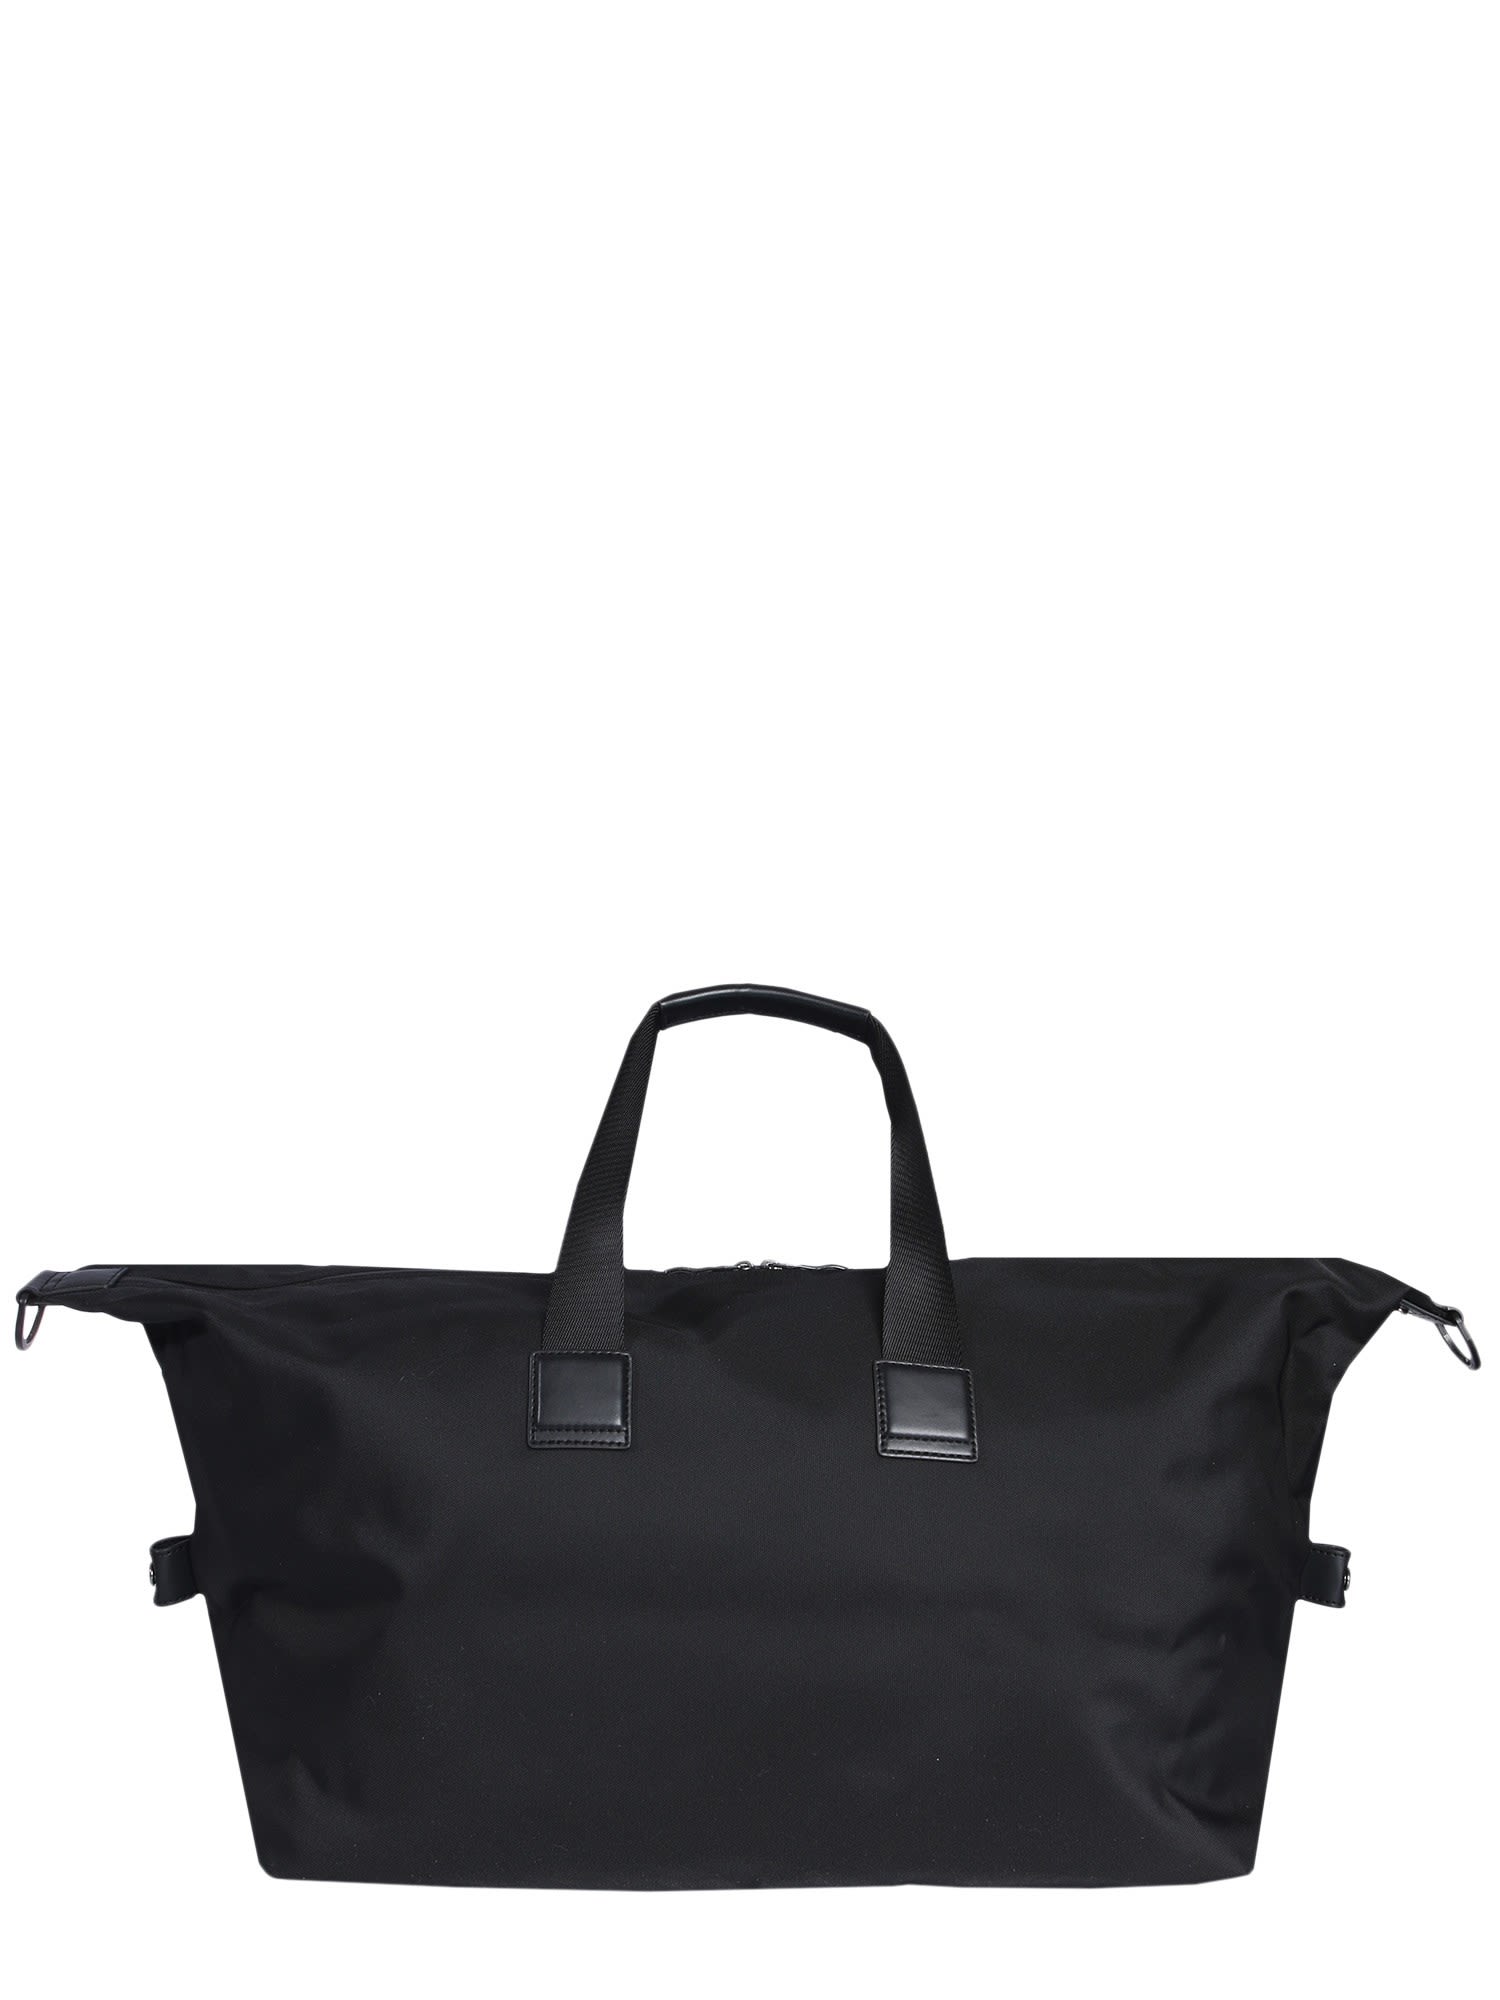 Hugo Boss Hugo Boss Travel Bag With Logo - NERO - 10887614 | italist